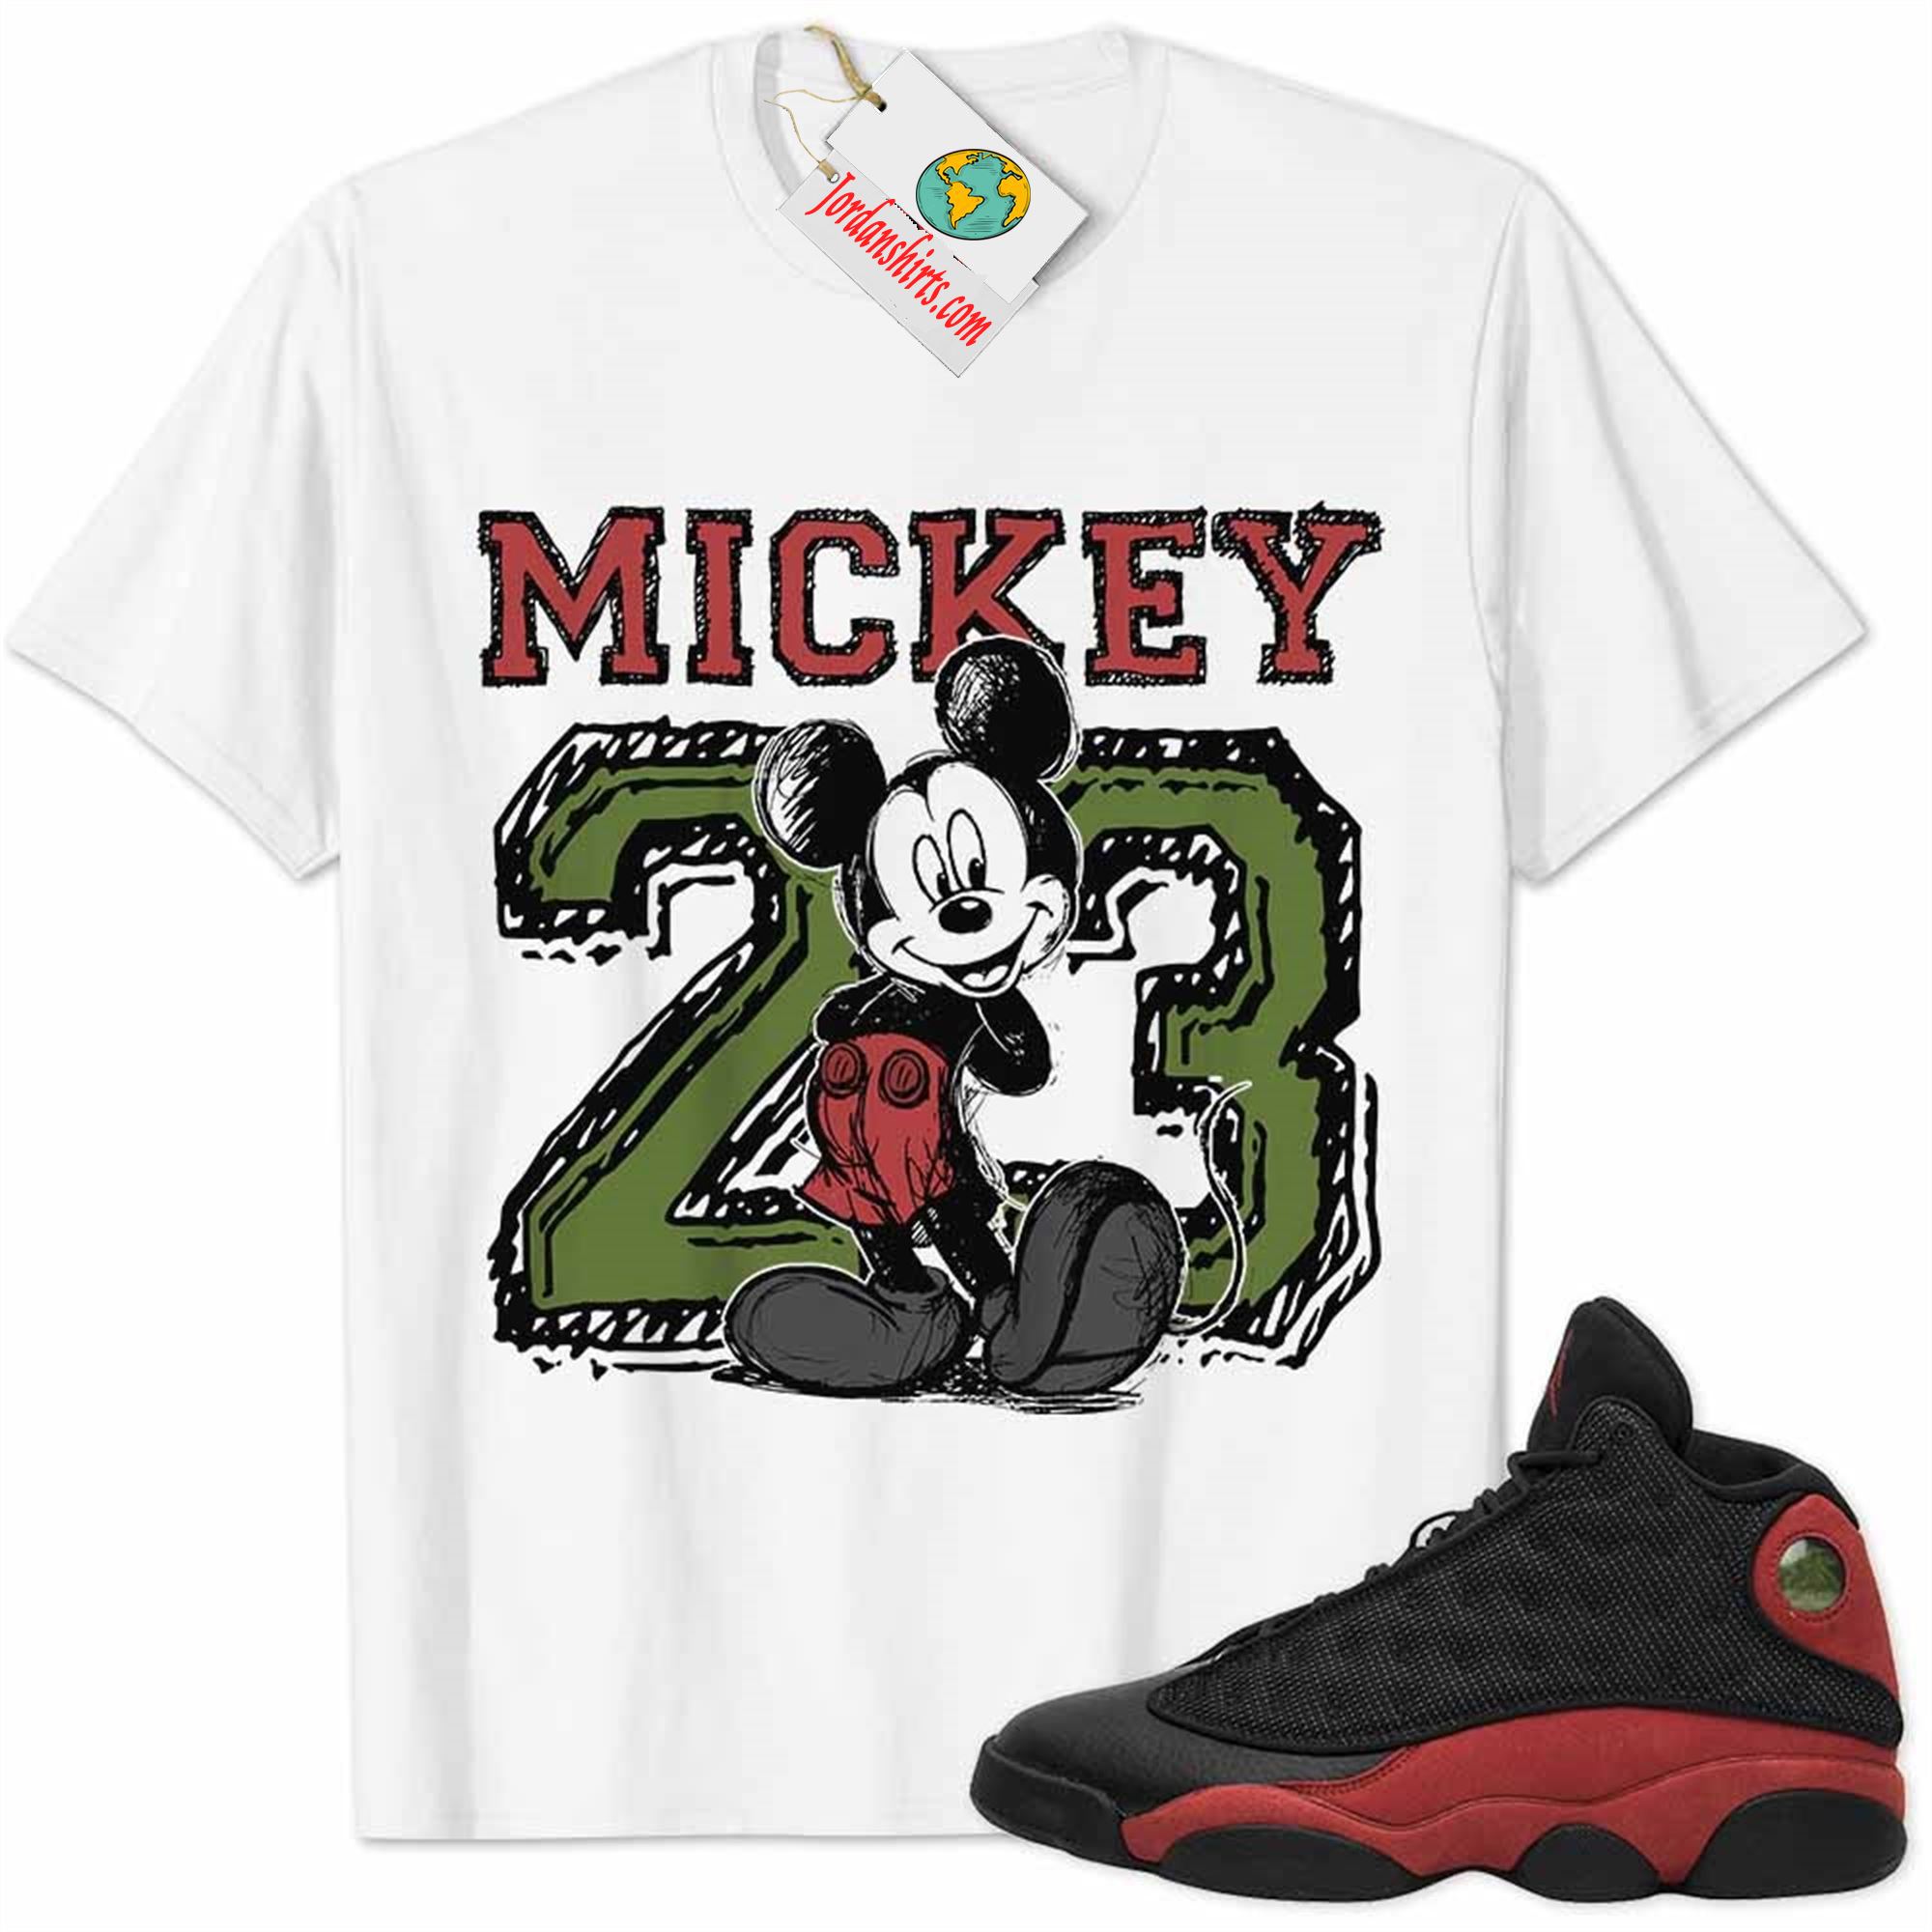 Jordan 13 Shirt, Bred 13s Shirt Mickey 23 Michael Jordan Number Draw White Size Up To 5xl